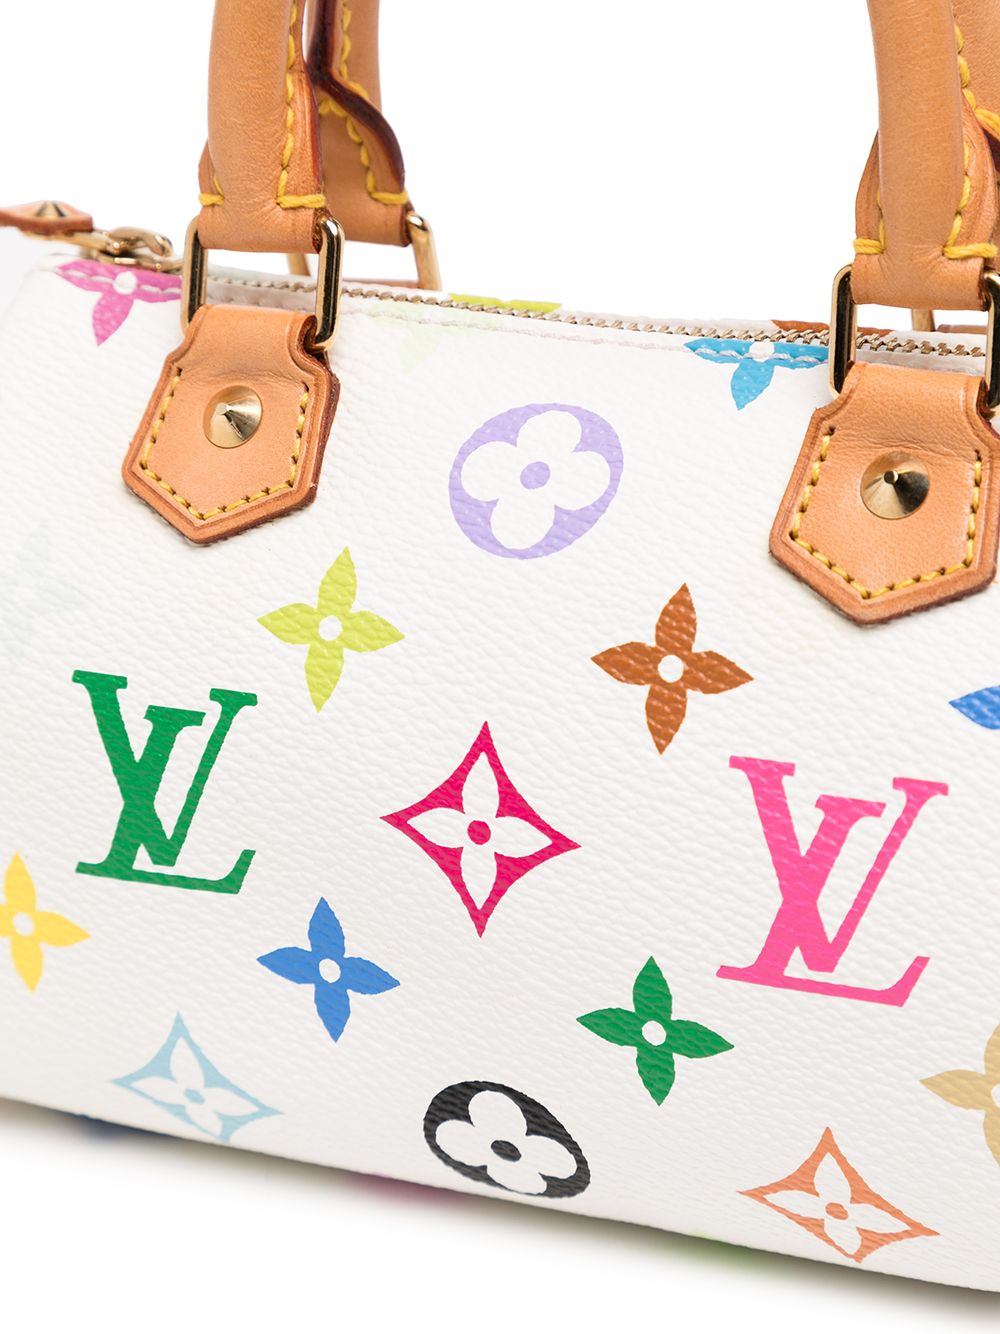 Louis Vuitton 2000s Monogram Speedy Handbag Mini: Vintage Elegance Meets  Modern Luxury